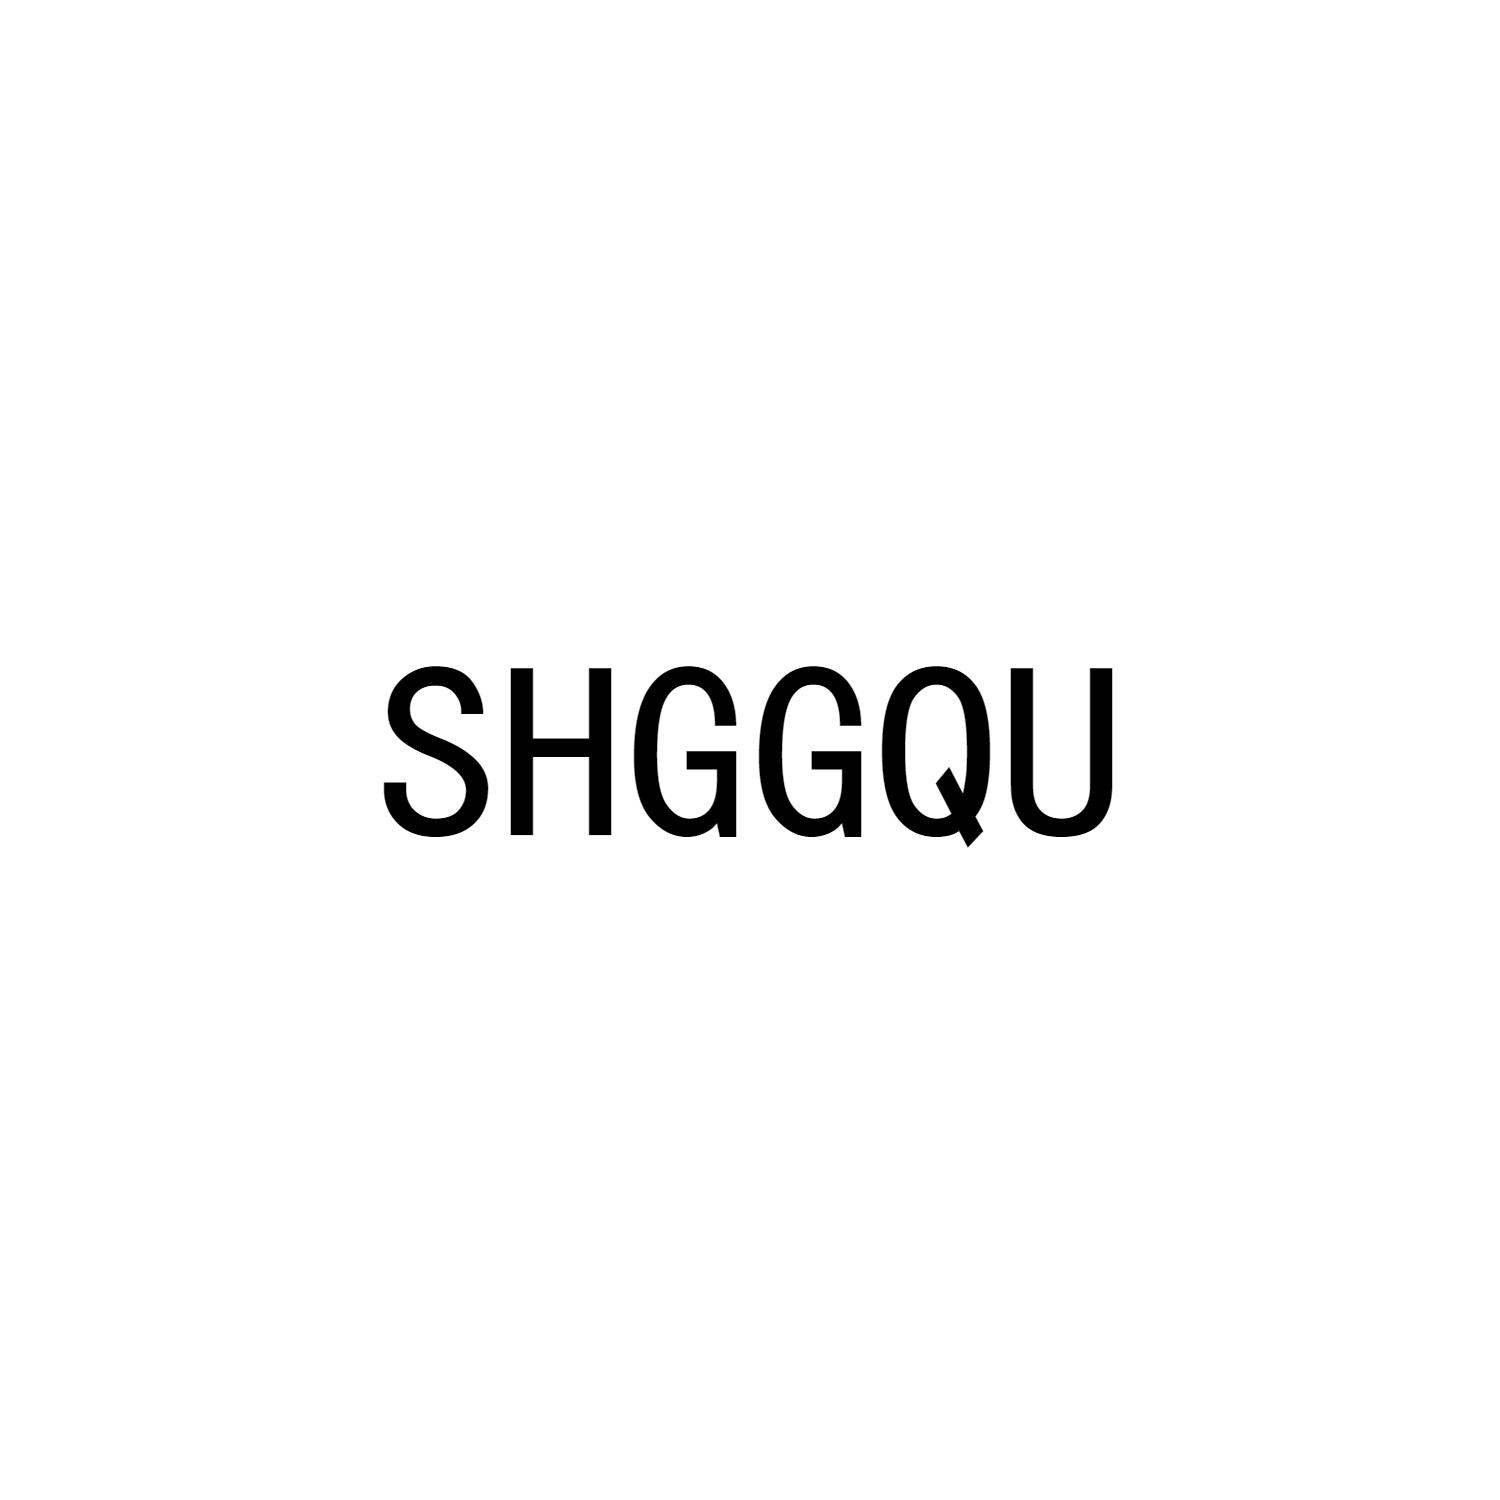 SHGGQU商标转让